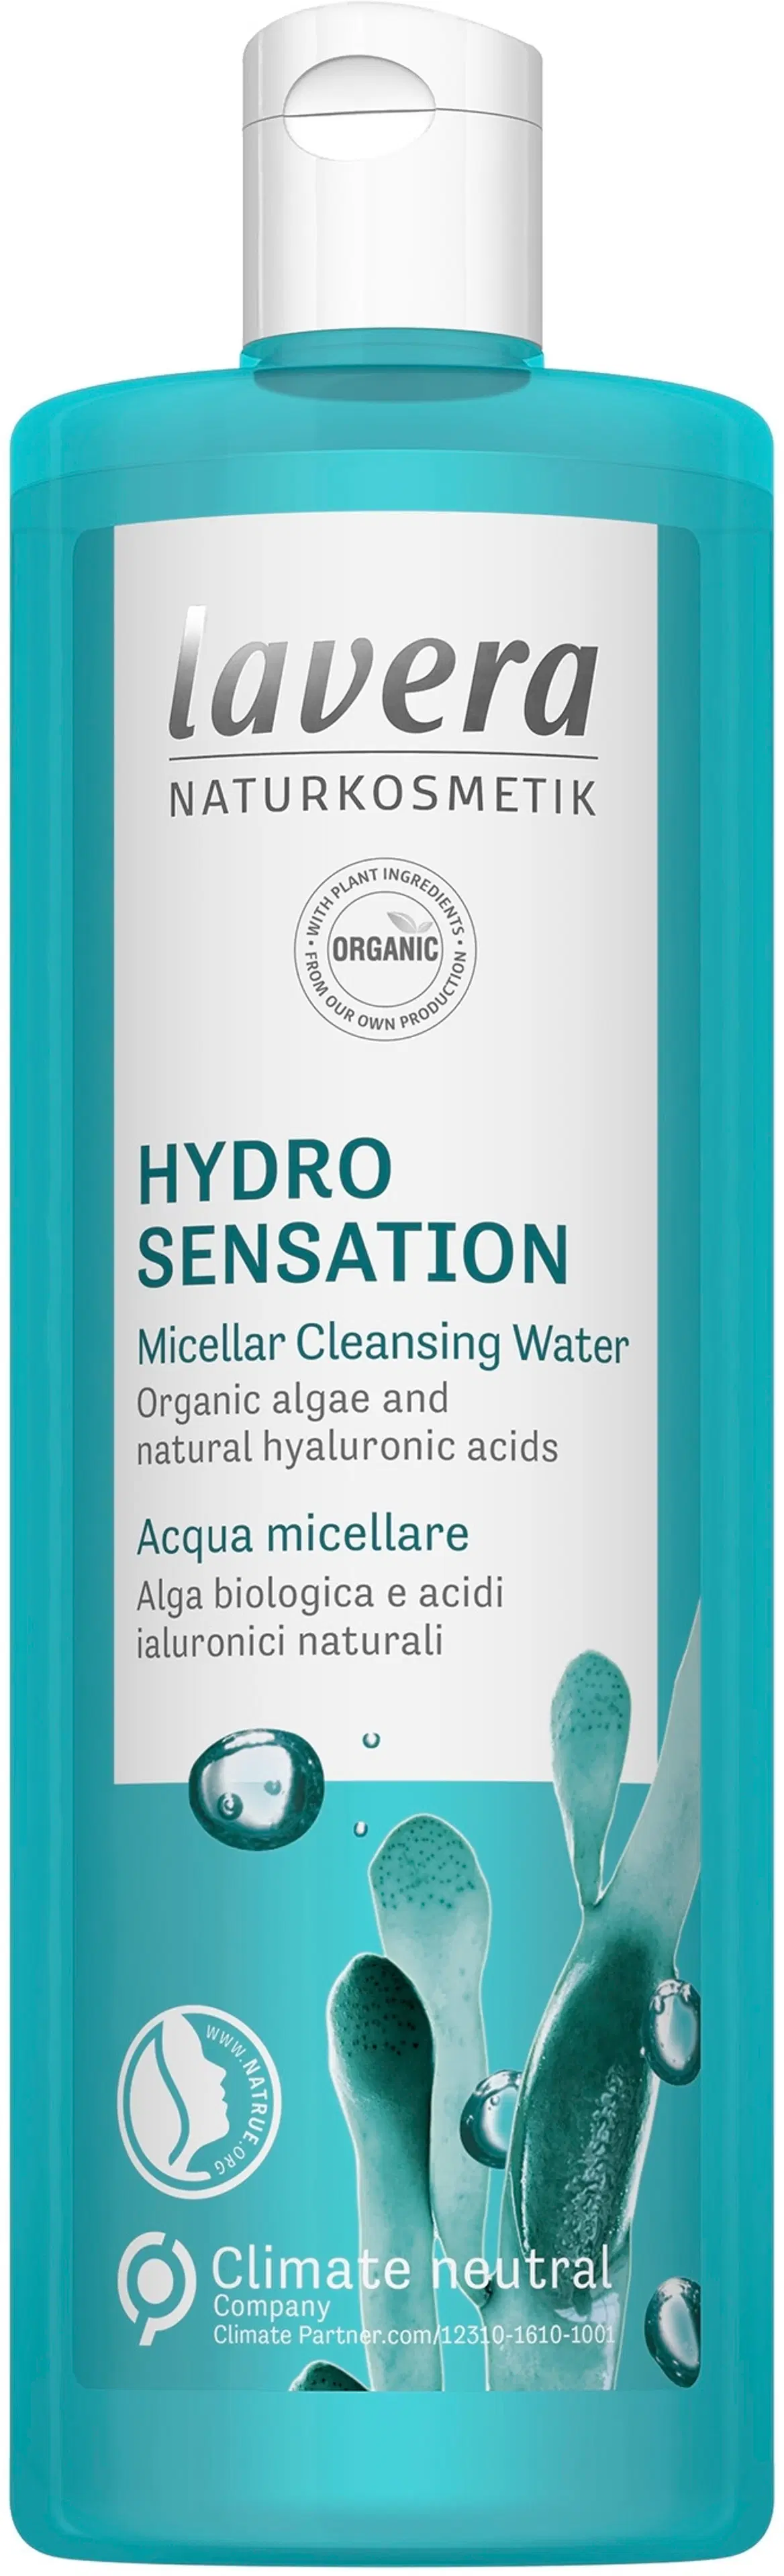 lavera Hydro Sensation Micellar Cleansing Water - Misellipuhdistusvesi 400 ml